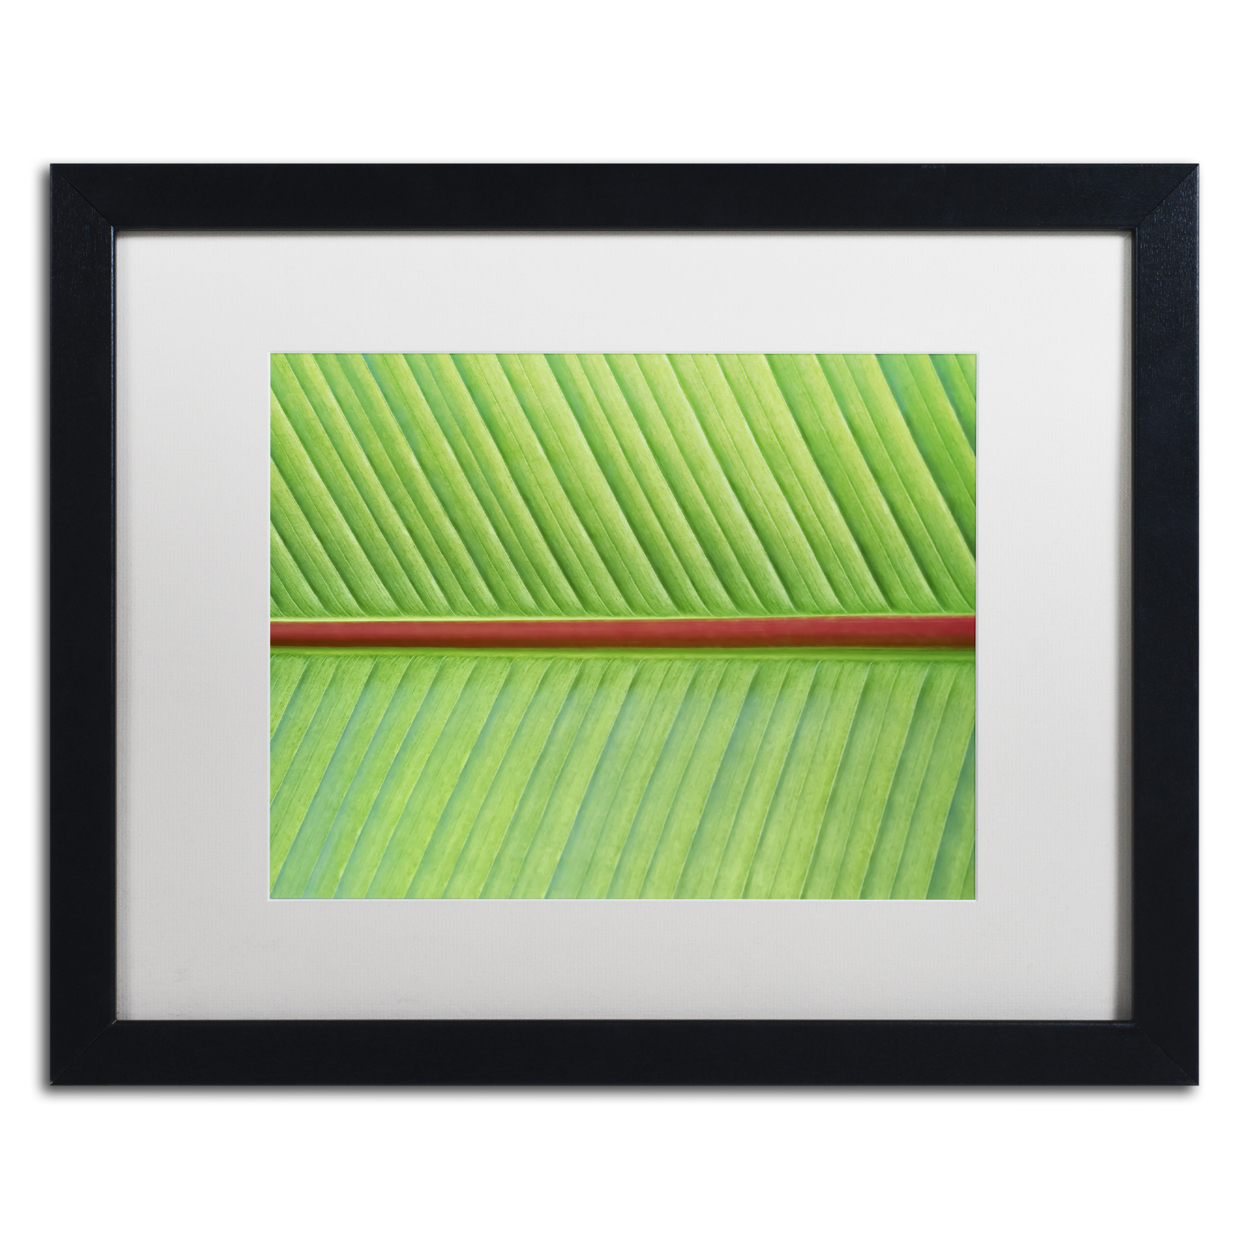 Cora Niele 'Leaf Texture V' Black Wooden Framed Art 18 X 22 Inches